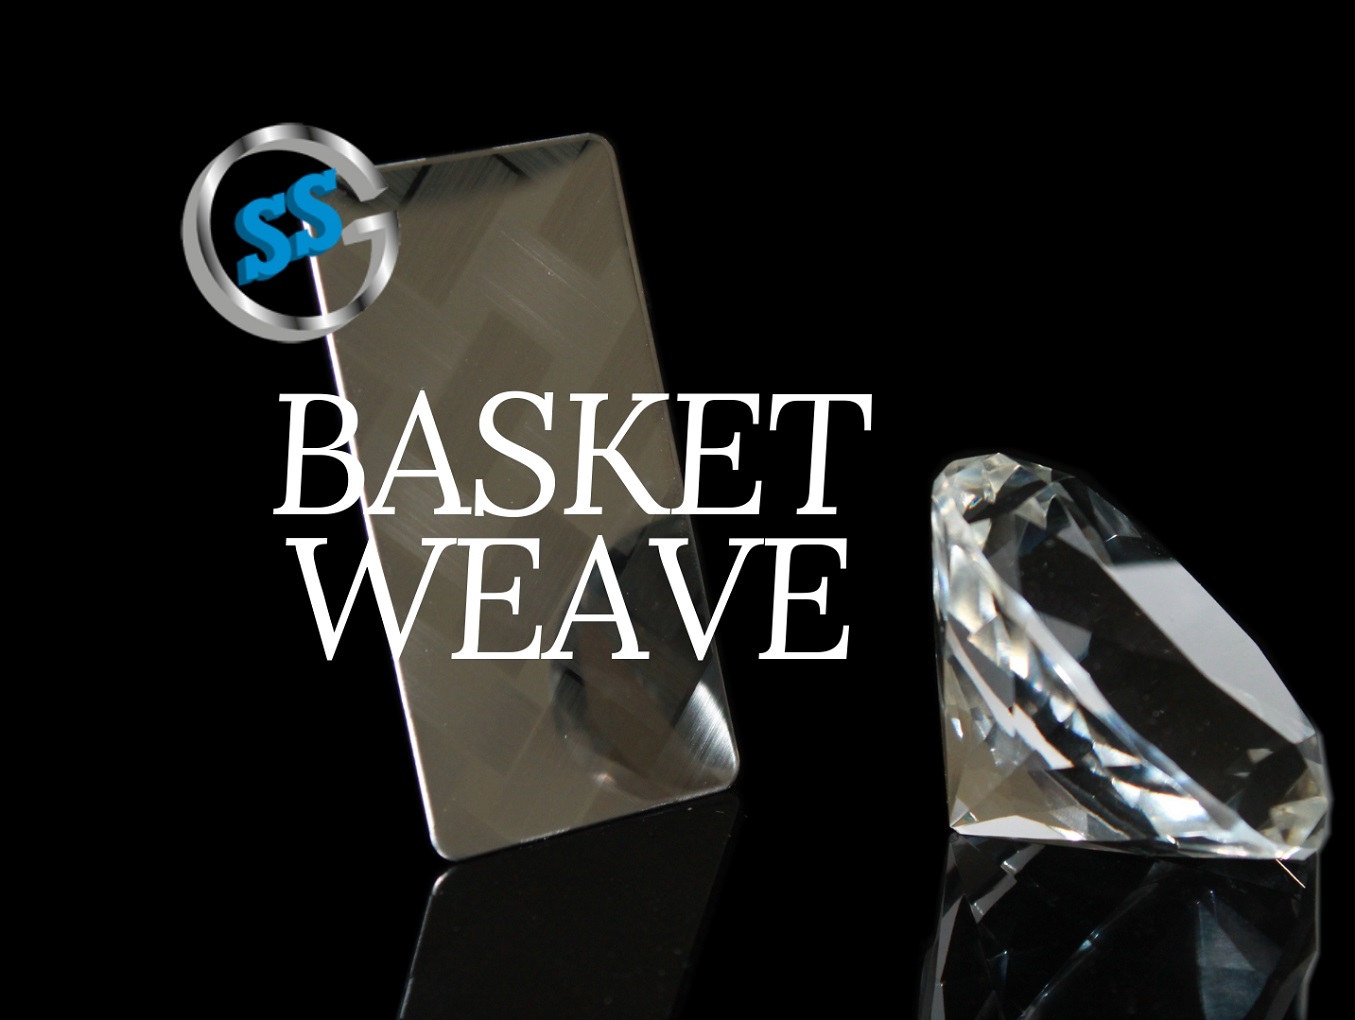 inox MetalArt, inox SuperMirror MetalArt, MetalArt Basket Weave